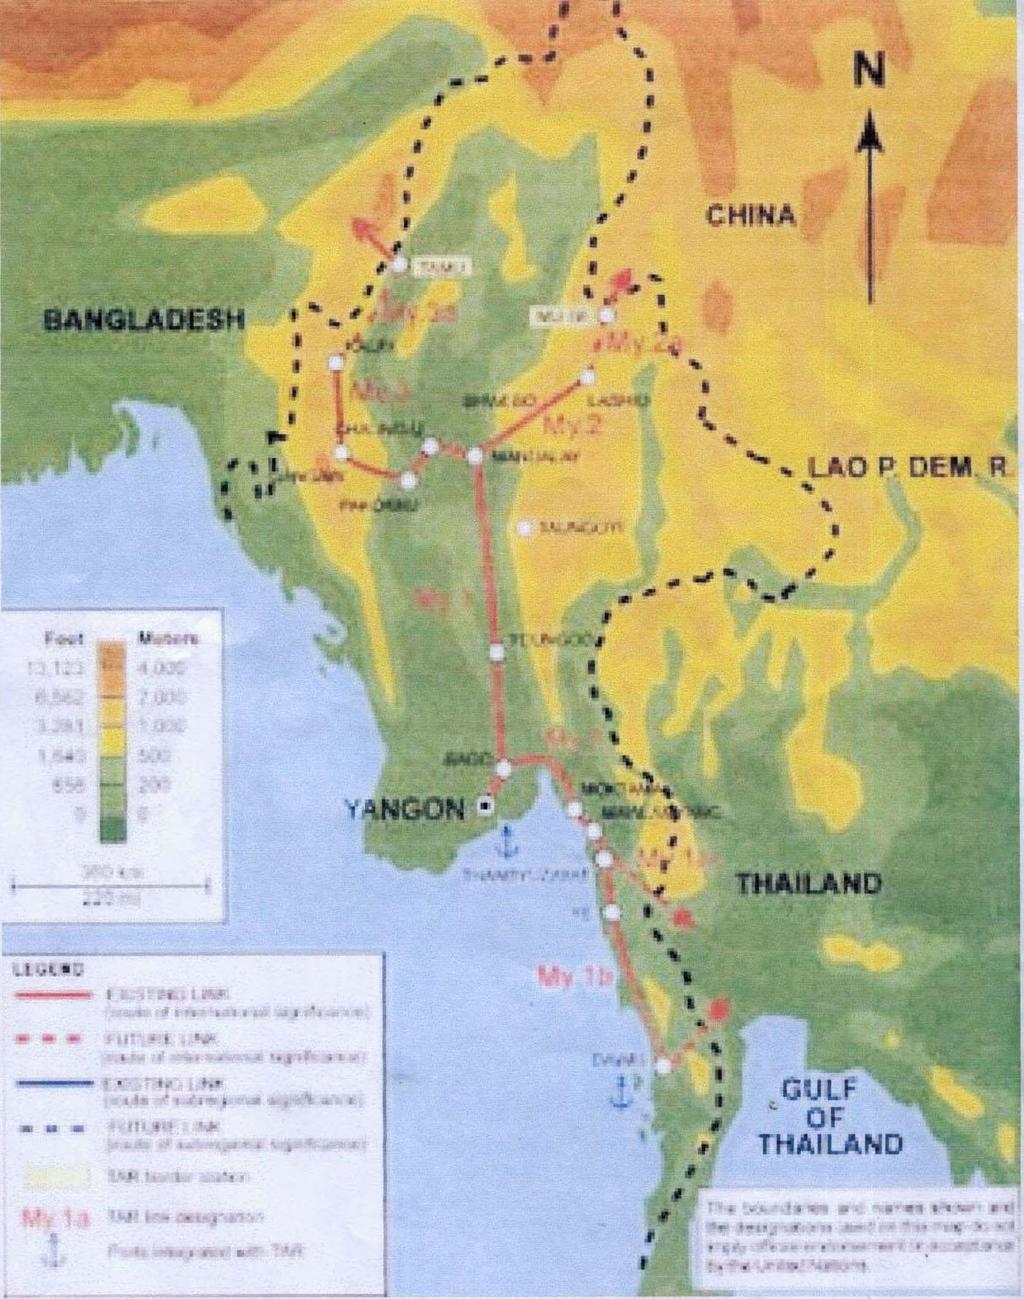 Important Railway Lines for International links Existing lines Mandalay-Yangon = 617 km Mandalay-Lashio = 313 km Mandalay-Kalay = 539 km Bago-Dawei = 516 km